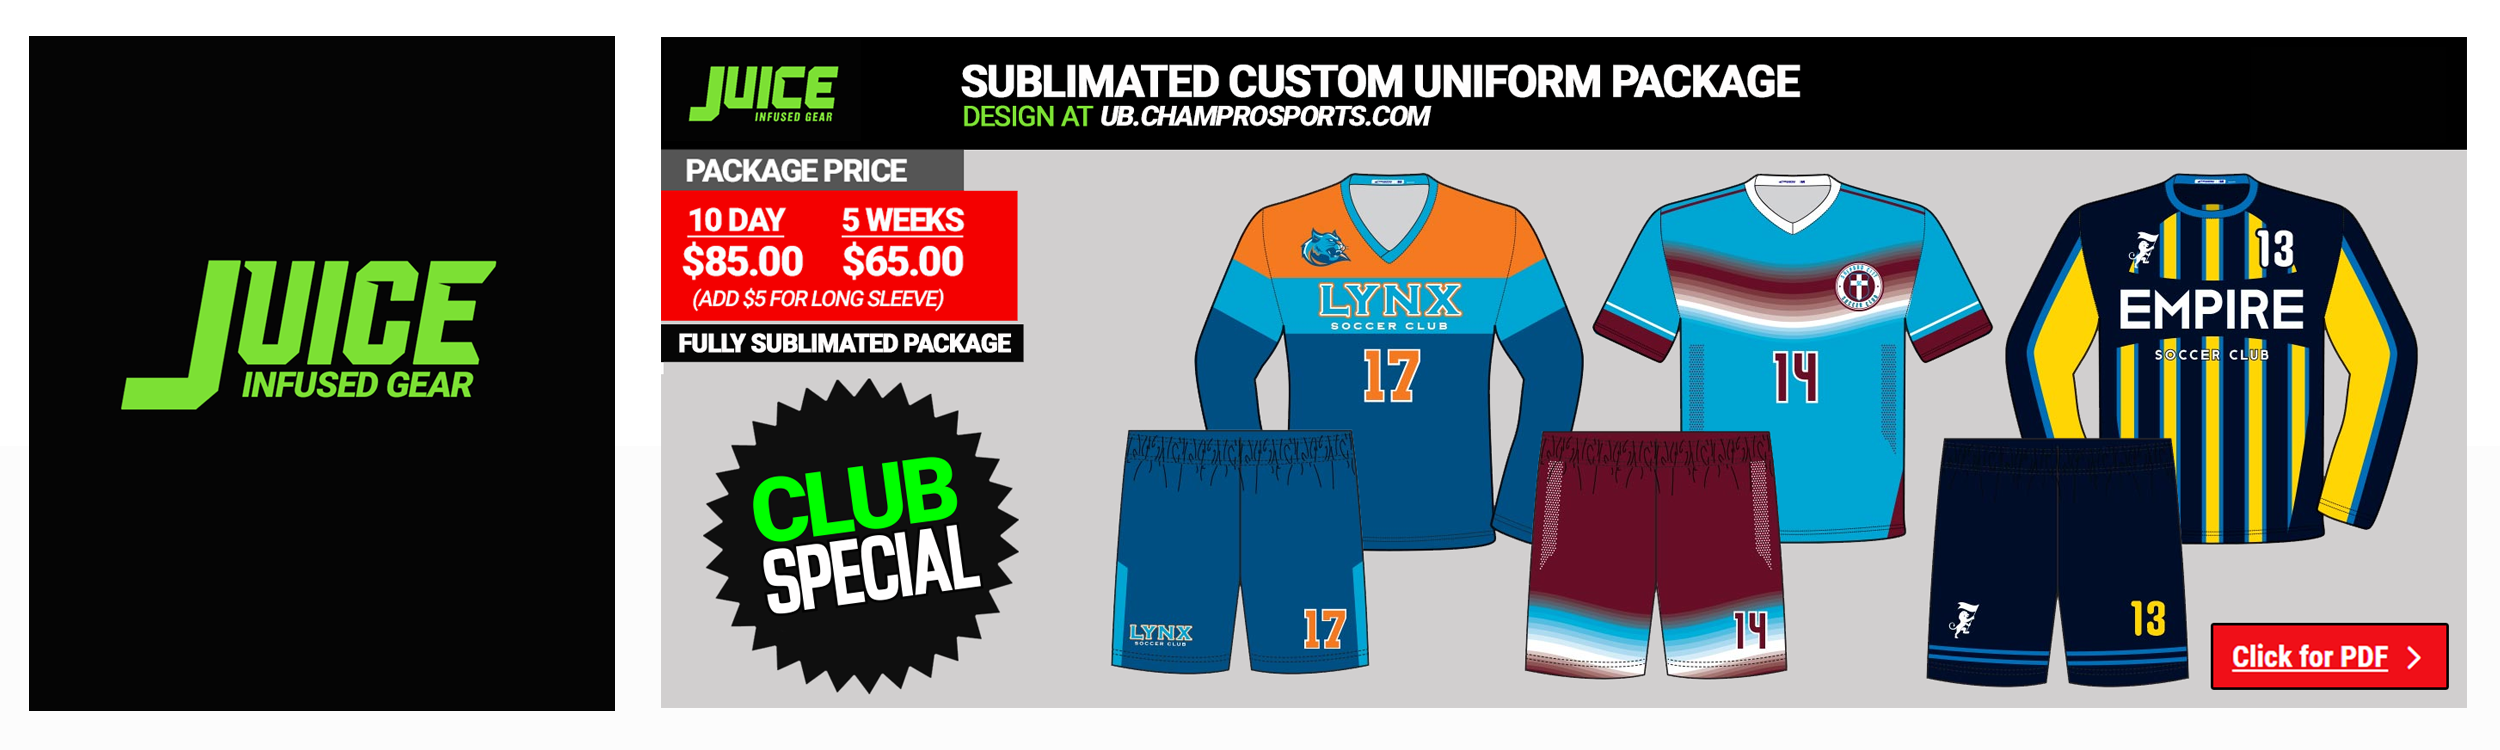 Sublimated Soccer Uniform Packages